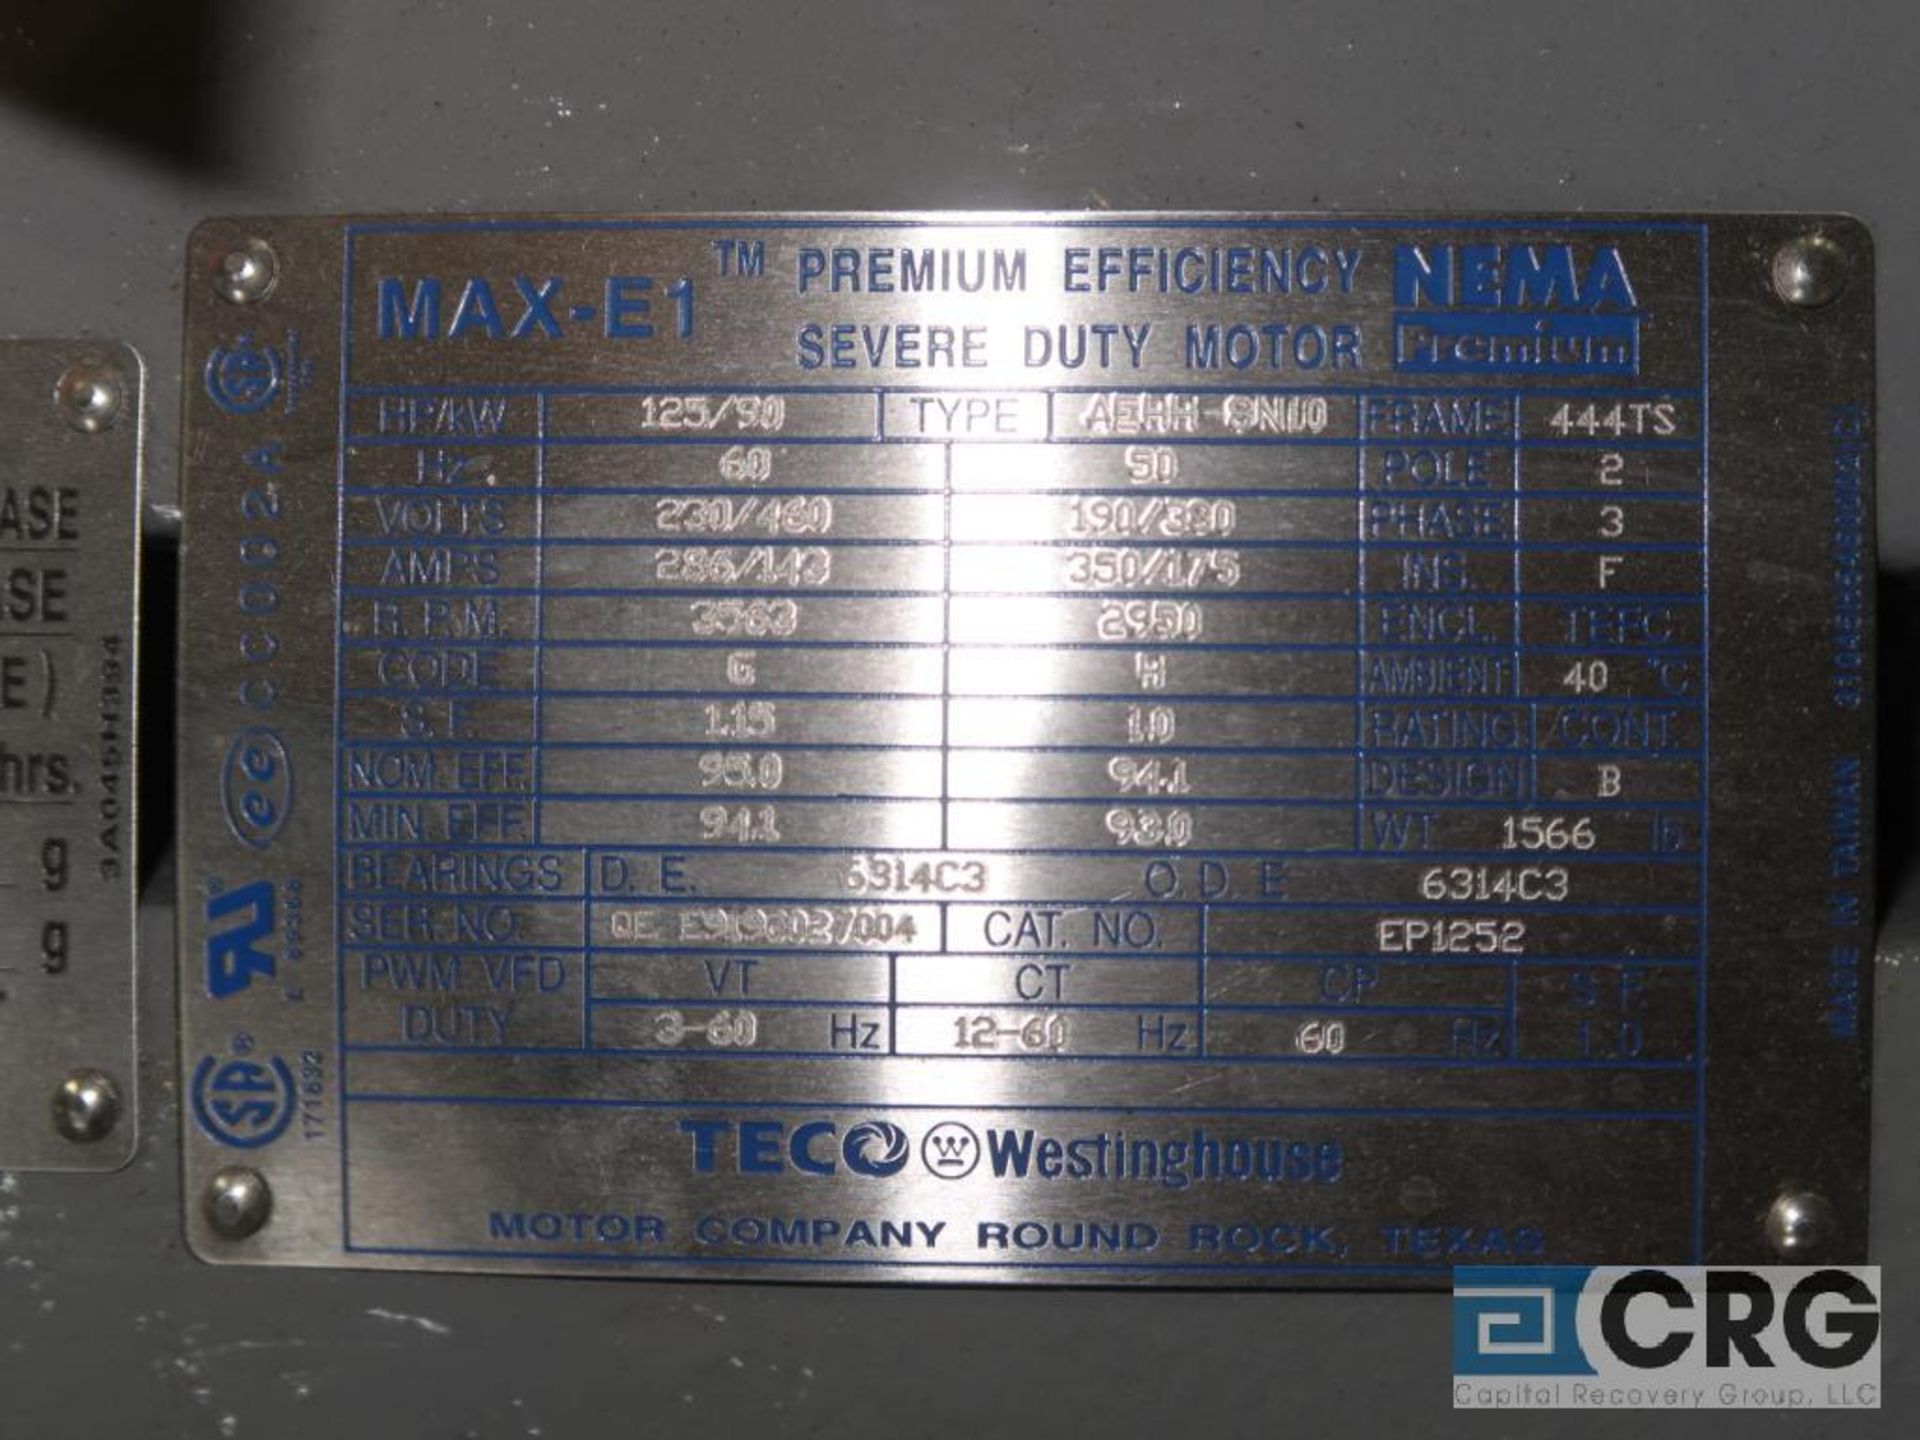 Teco Westinghouse MAX-E1 motor, 125 HP, 3,563 RPMs, 230/460 volt, 3 ph., 444 TS frame (Finish - Image 2 of 2